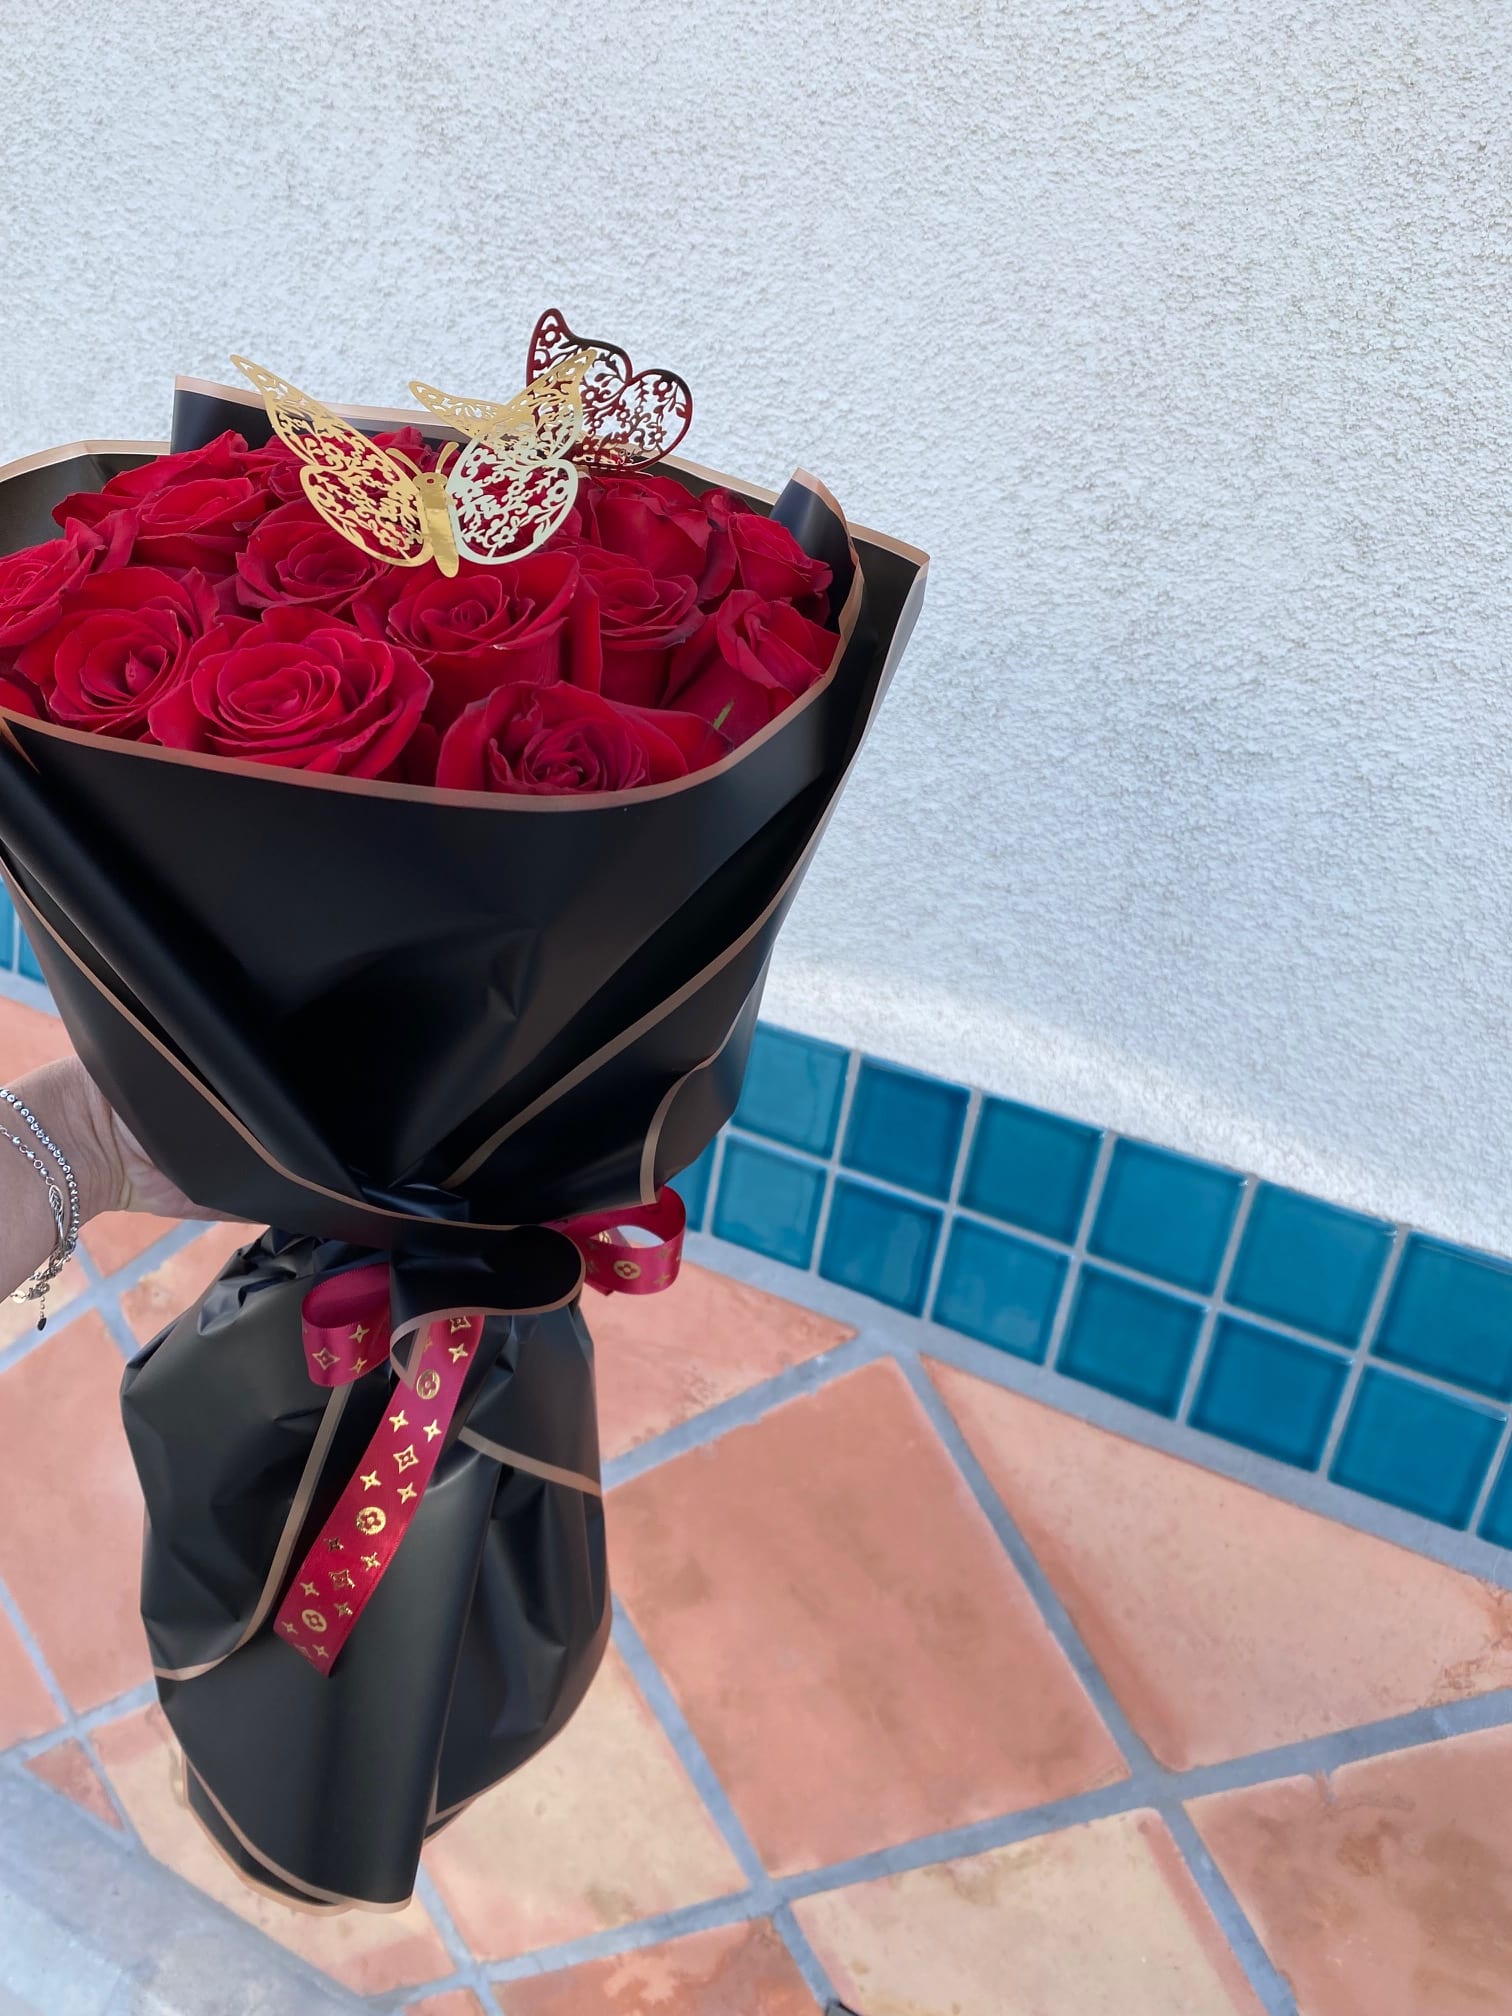 Red Rose Ribbon Bouquet in Pico Rivera, CA